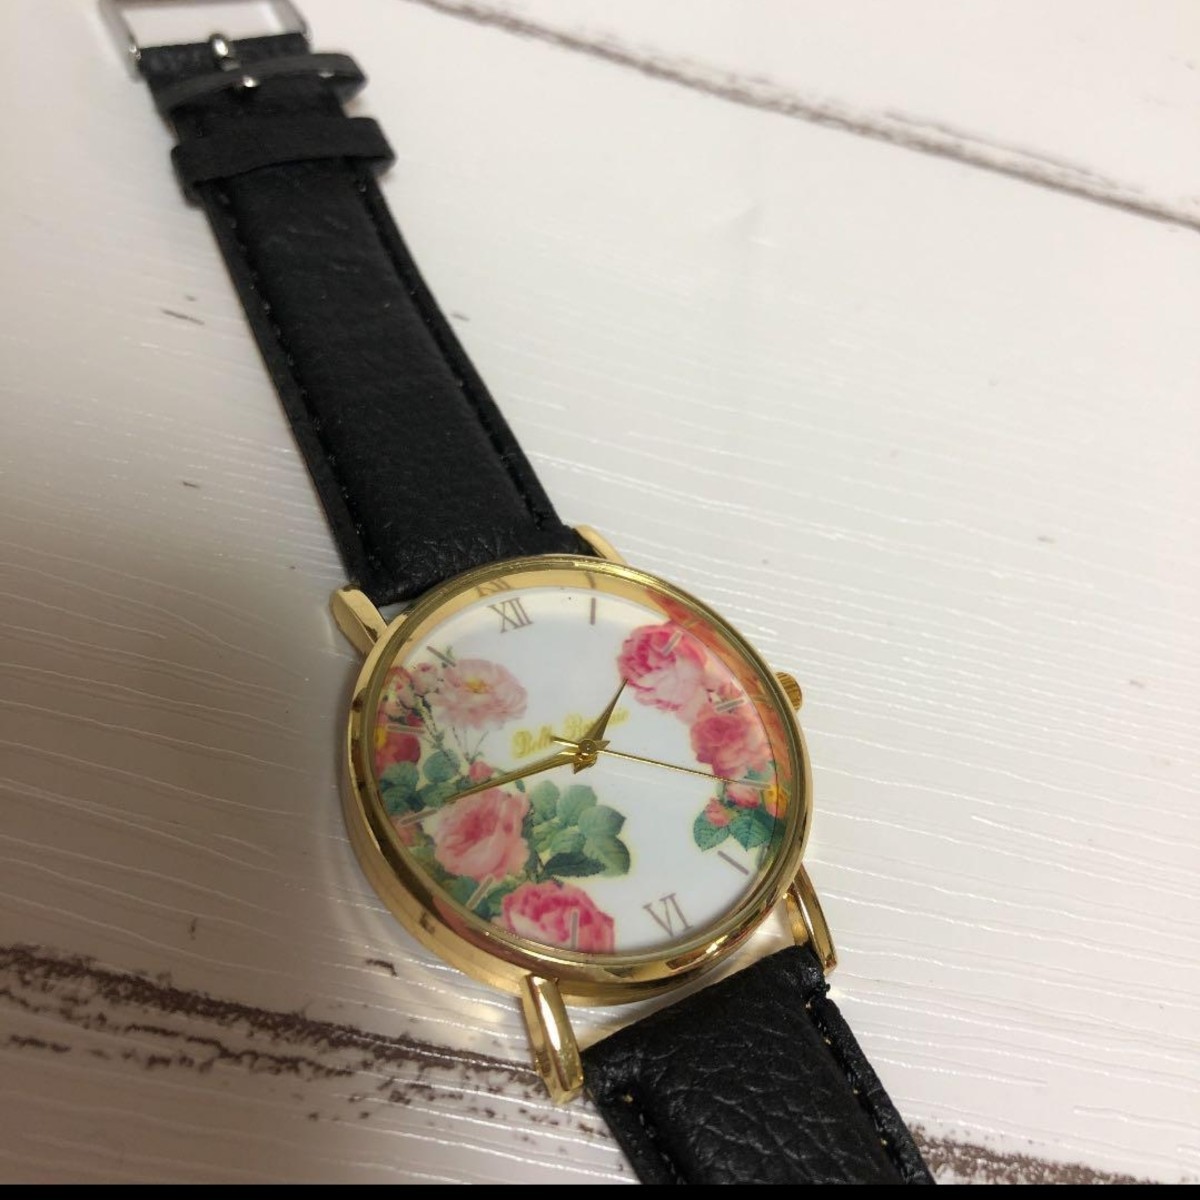 A26 新品 腕時計 時計 ブラック 黒 薔薇 ばら アクセサリー アナログ ファッション雑貨 小物 レディース _画像3